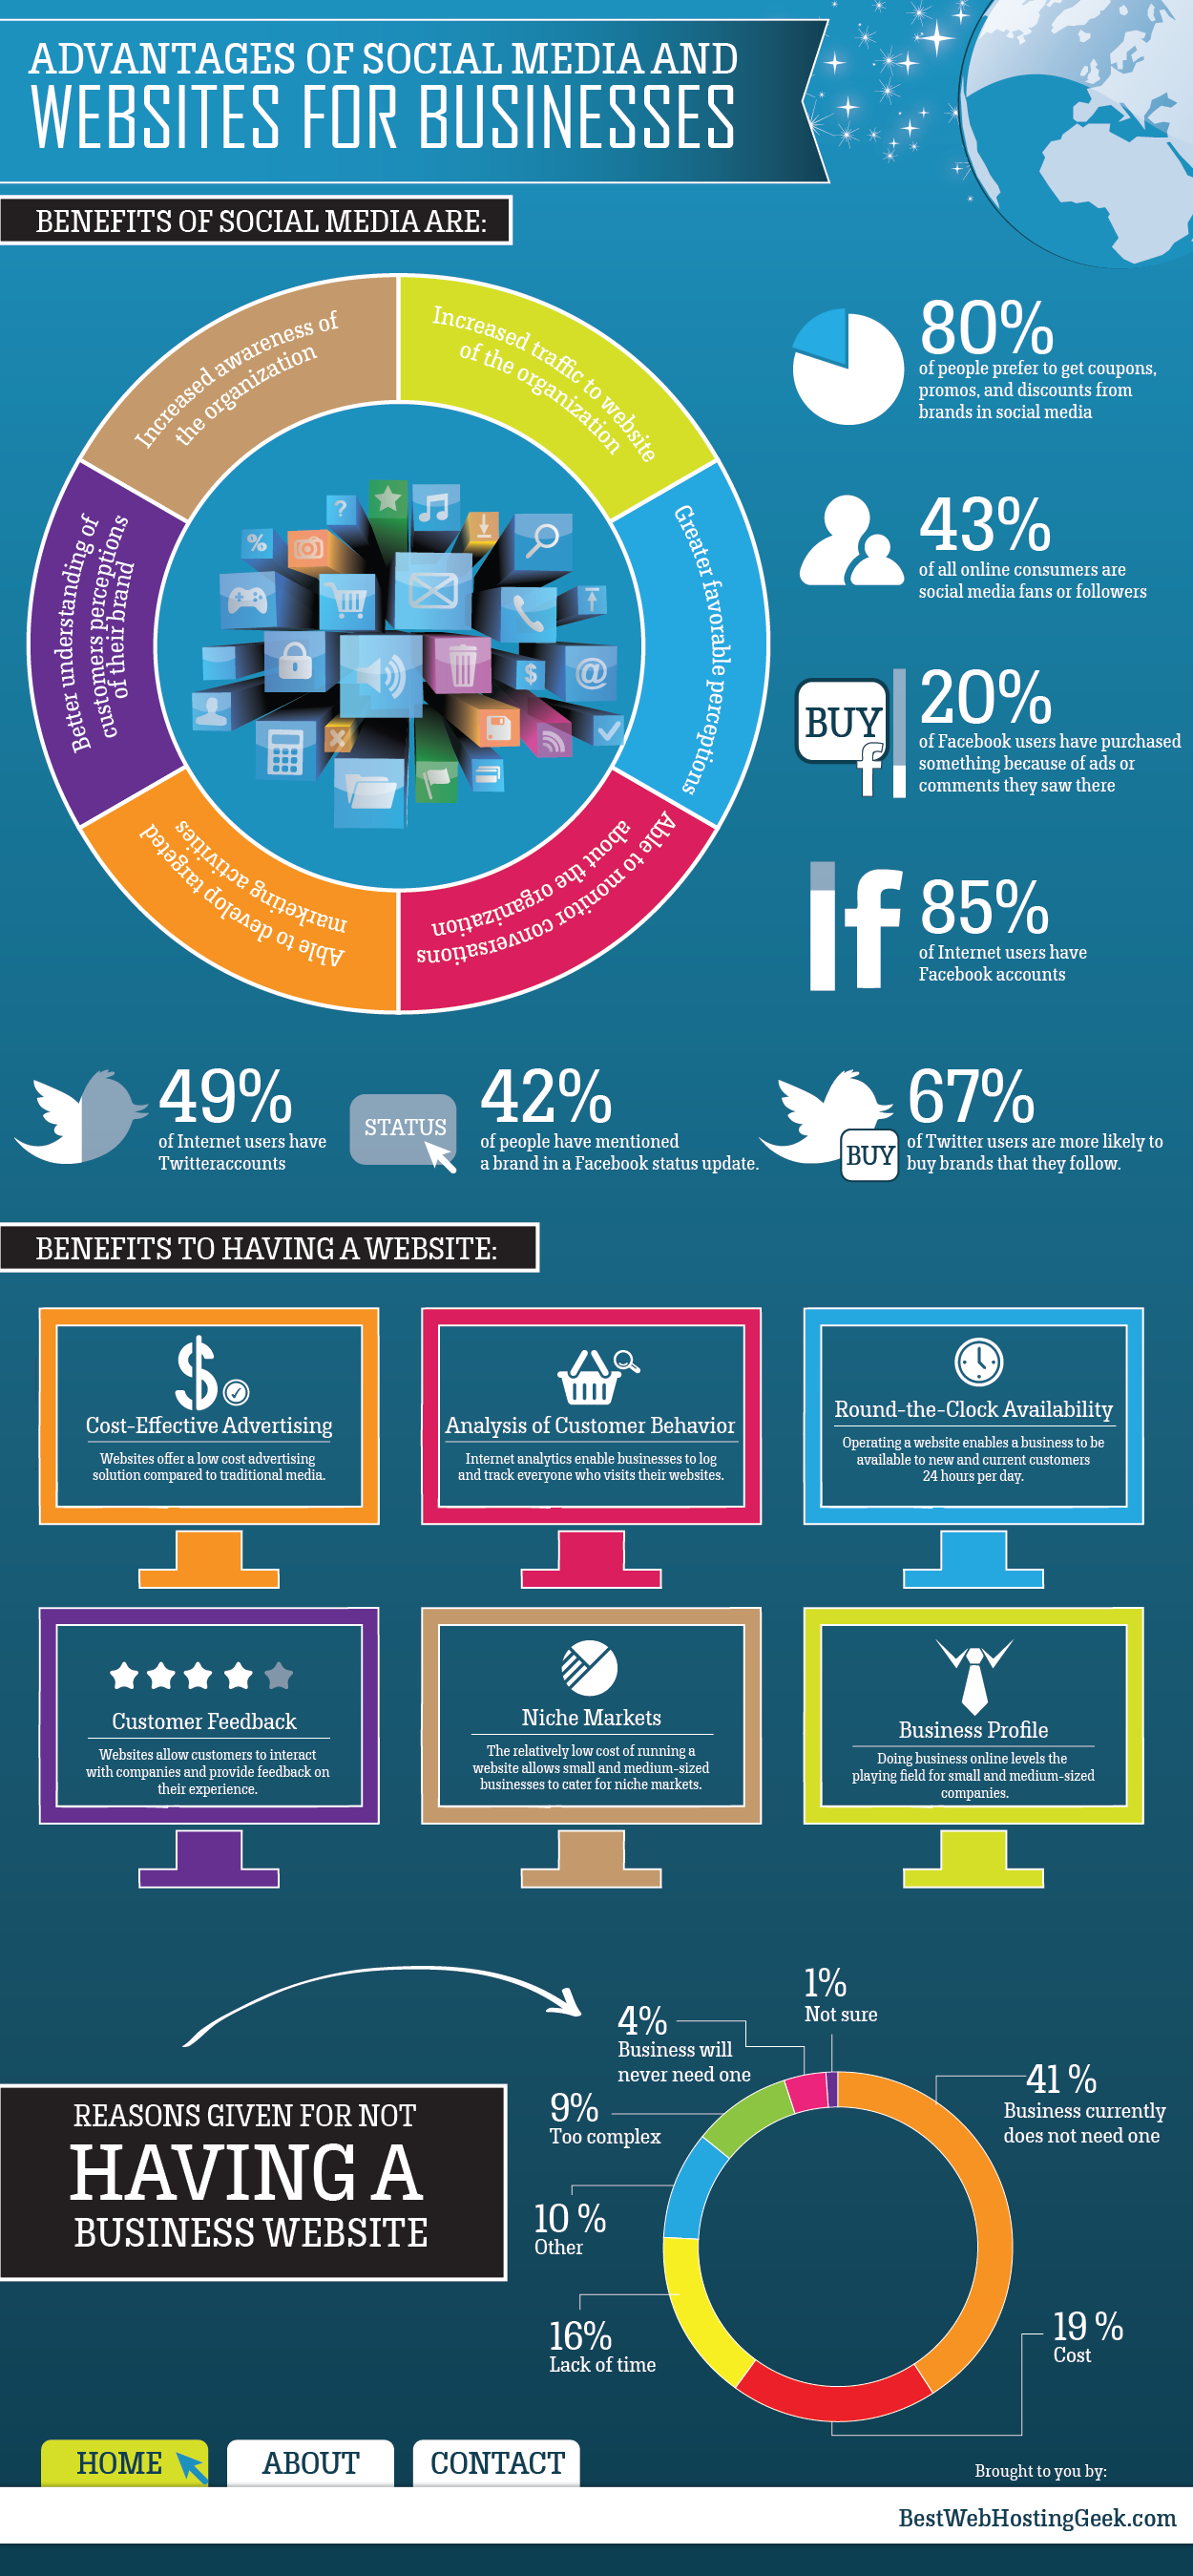 15+ Easy Social Media Marketing Strategy (Infographic)2021